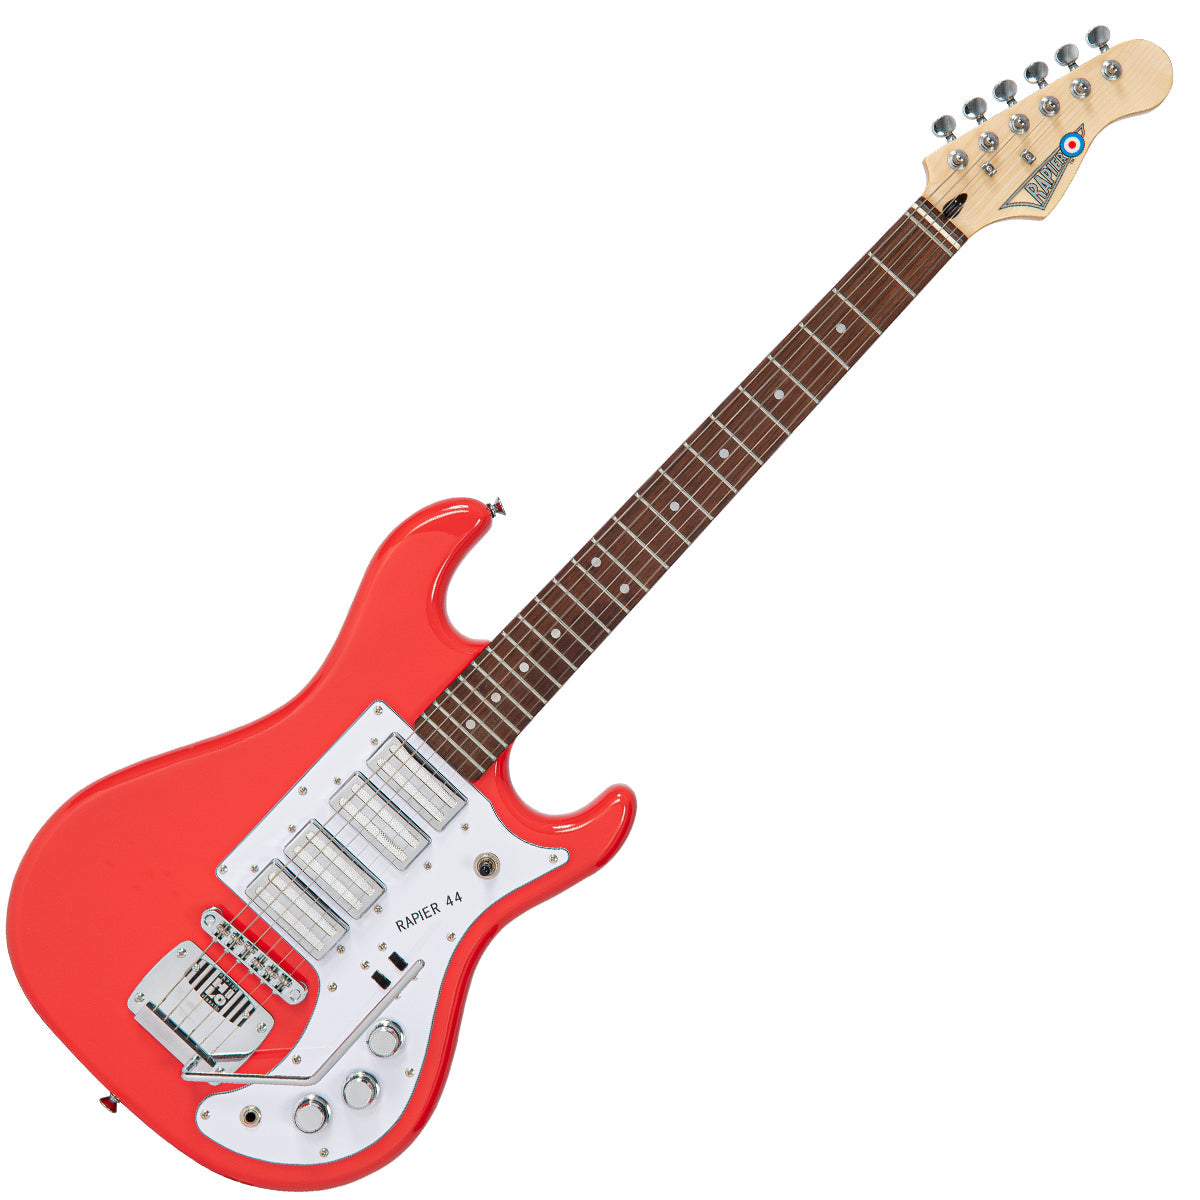 Rapier 44 Electric Guitar ~ Fiesta Red, Electric Guitar for sale at Richards Guitars.